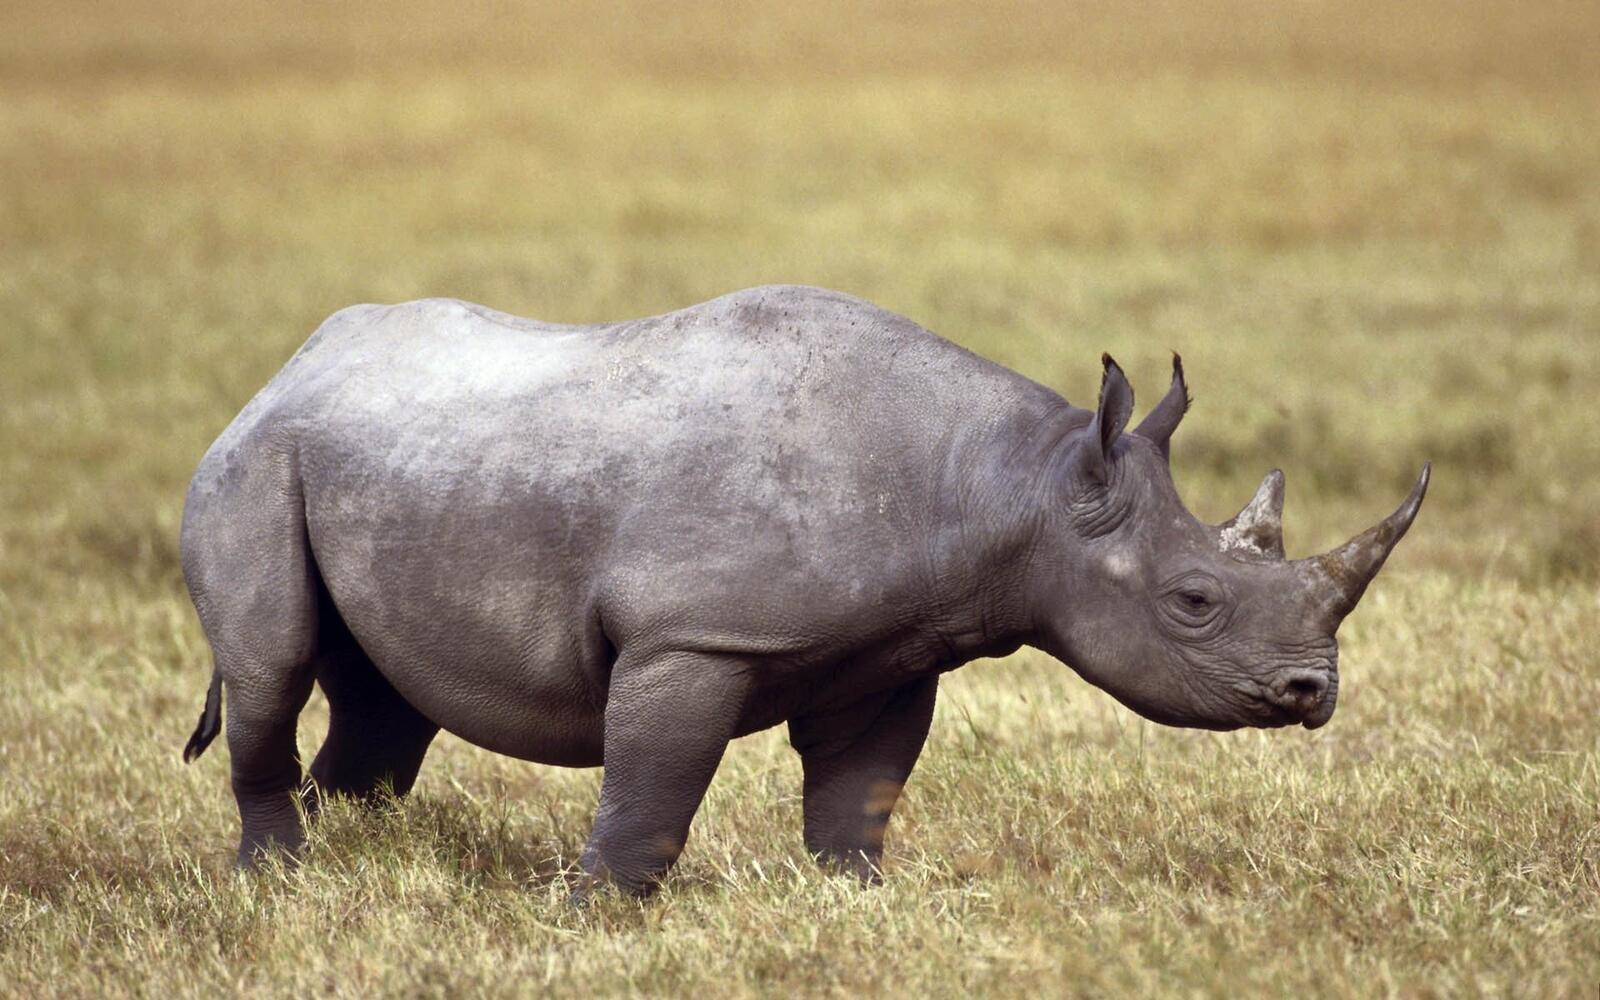 Wallpapers field horns rhino on the desktop